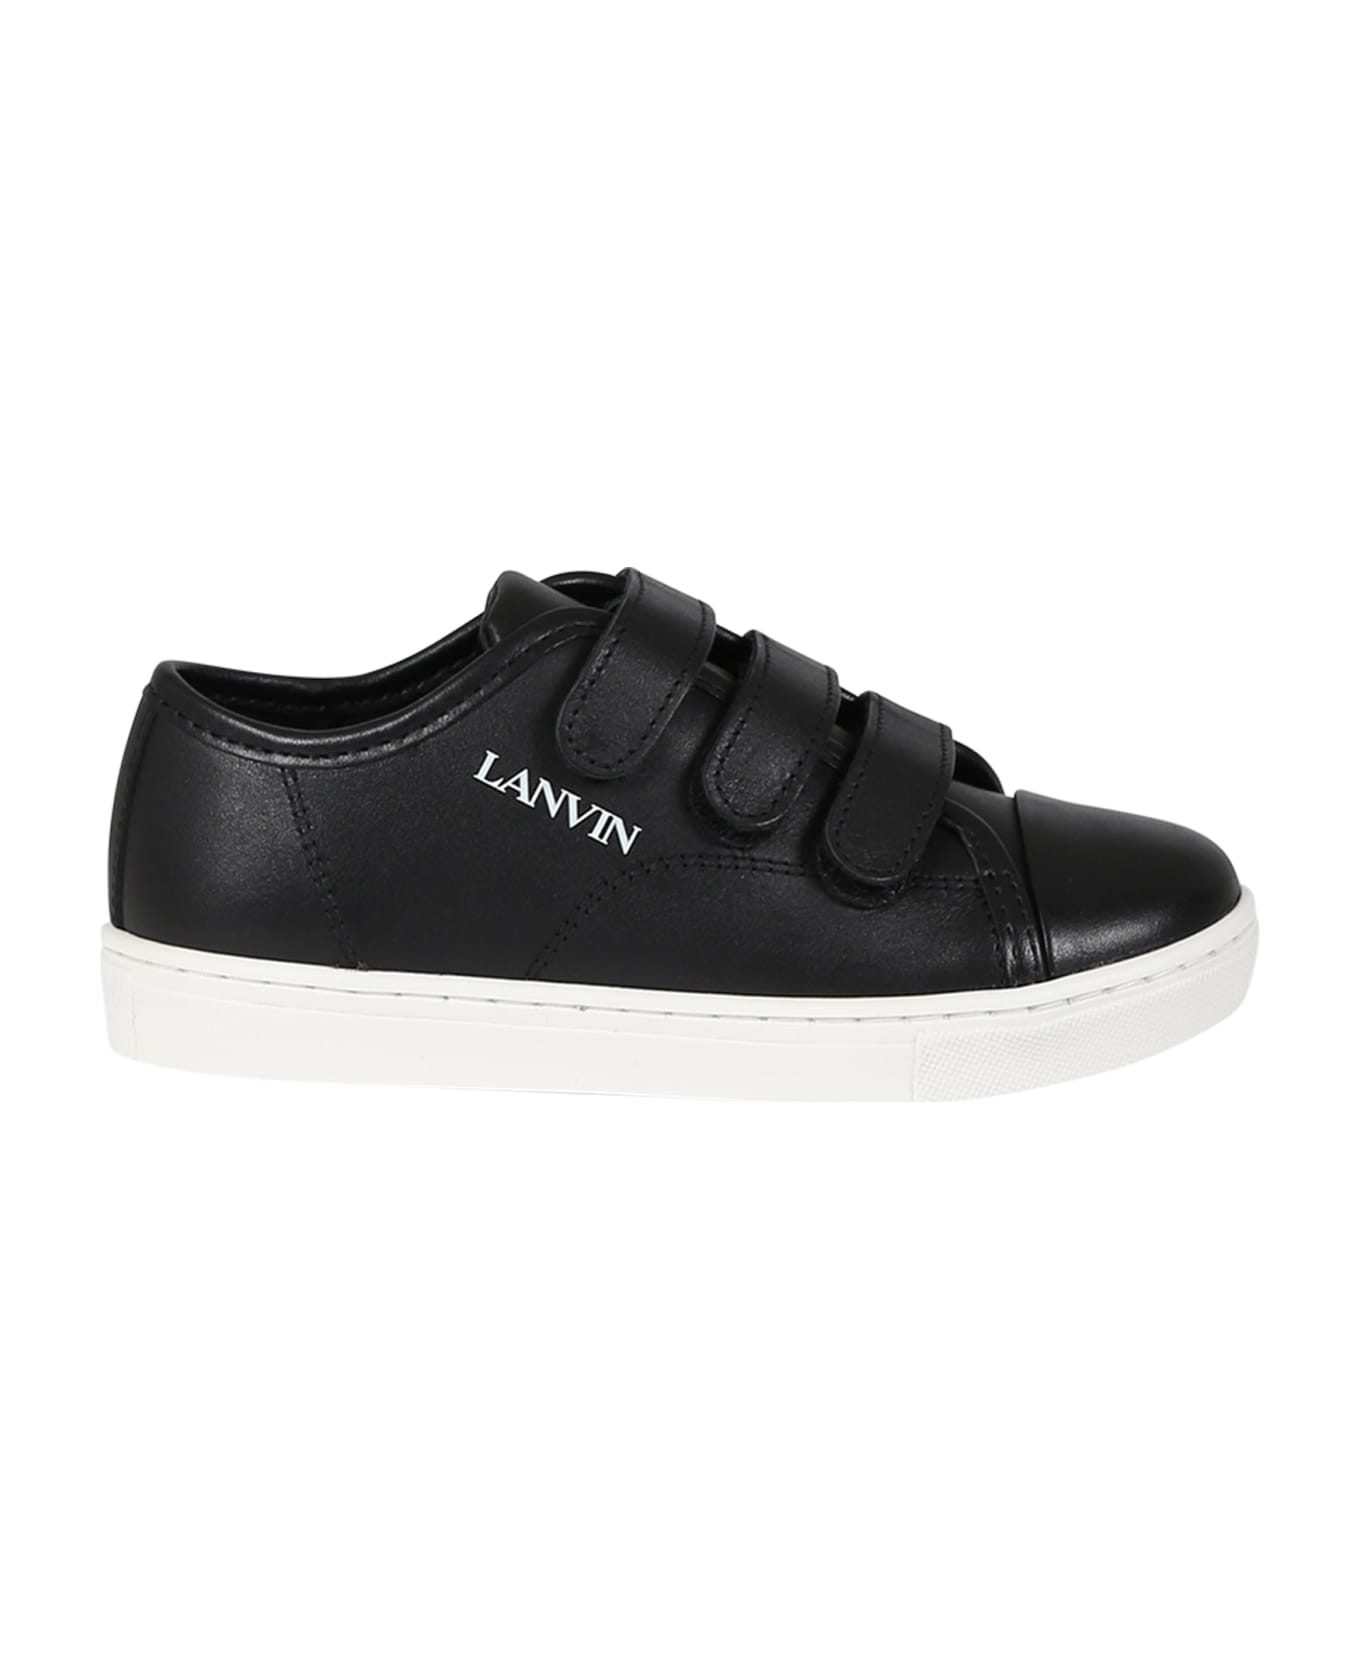 Lanvin Black Sneakers For Kids With Logo - Black